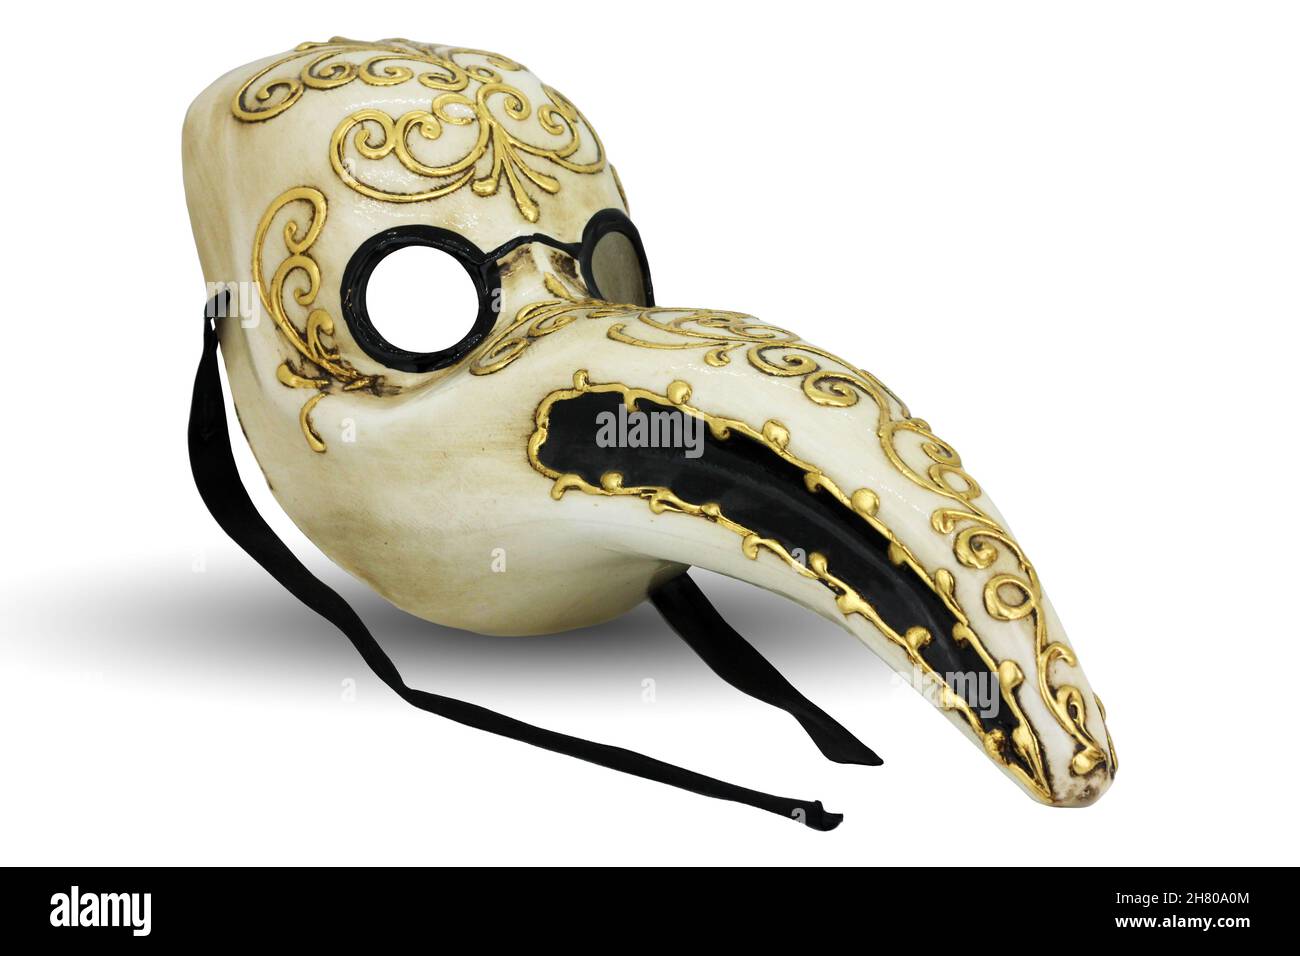 Doctor plague - traditional Venetian carnival mask. Popular souvenir from Venice. Stock Photo